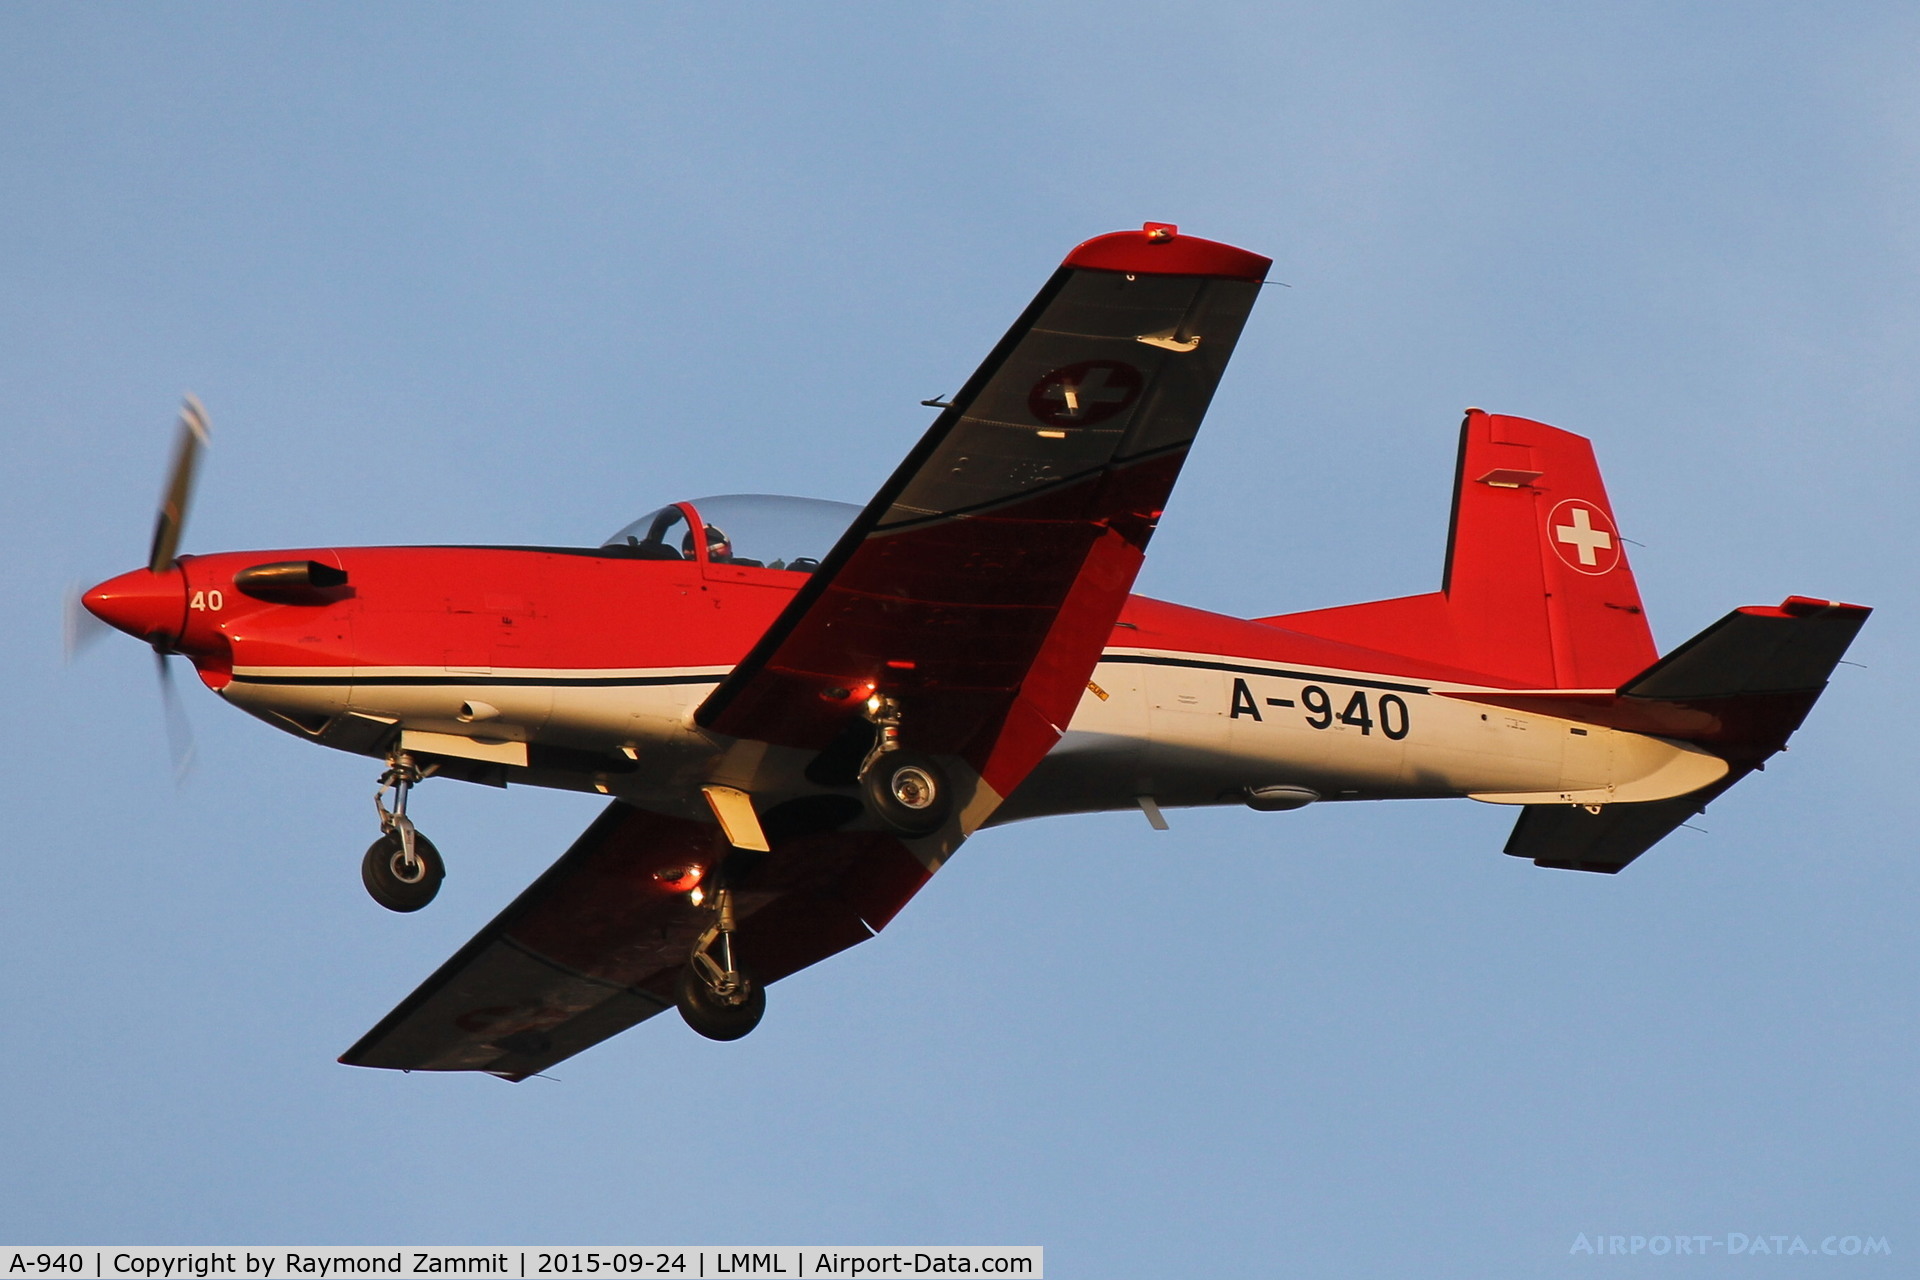 A-940, Pilatus PC-7 Turbo Trainer C/N 348, Pilatus PC-7 A-940 Swiss Air Force